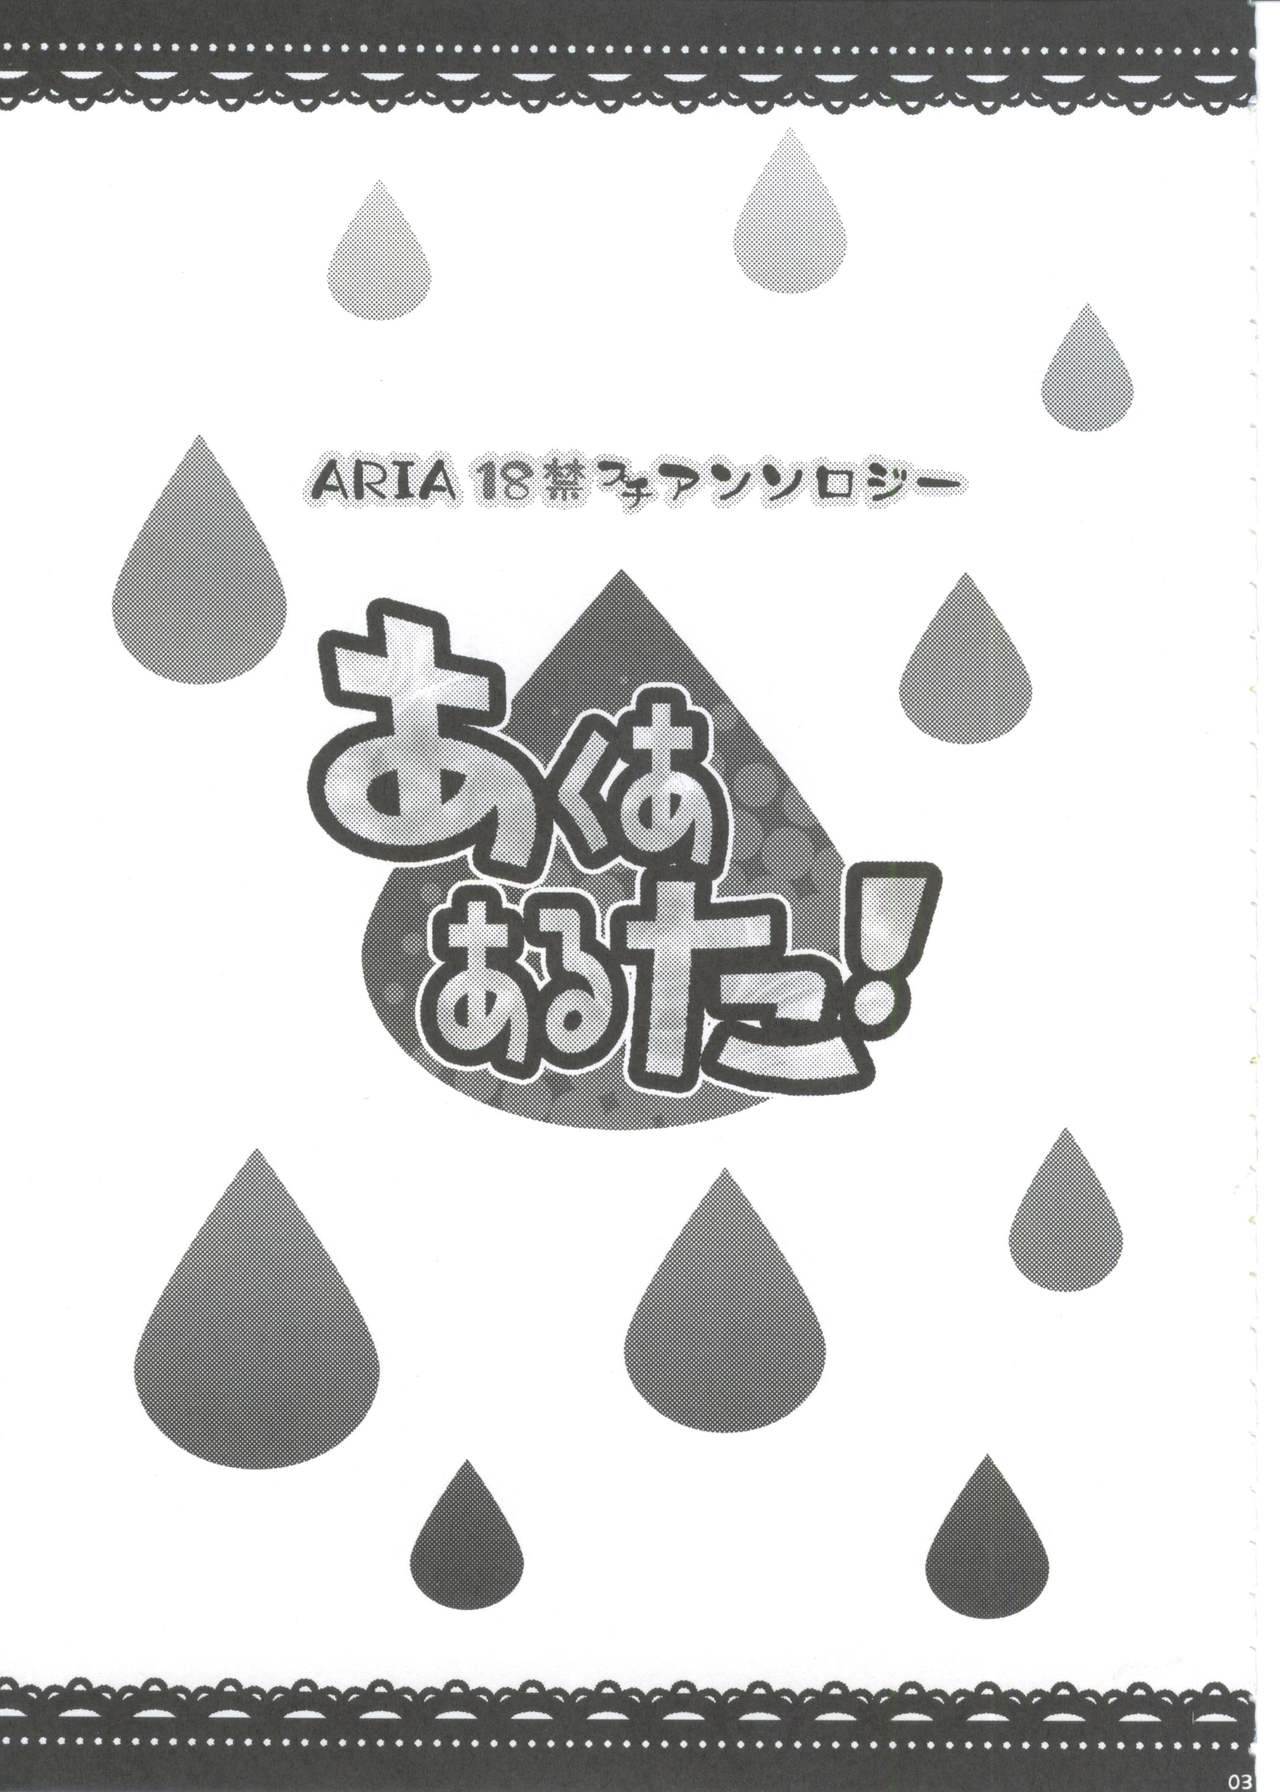 (C78) [A-Anima] Aqua Alta! (ARIA) (C78) [A-Anima] あくああるた! (ARIA)